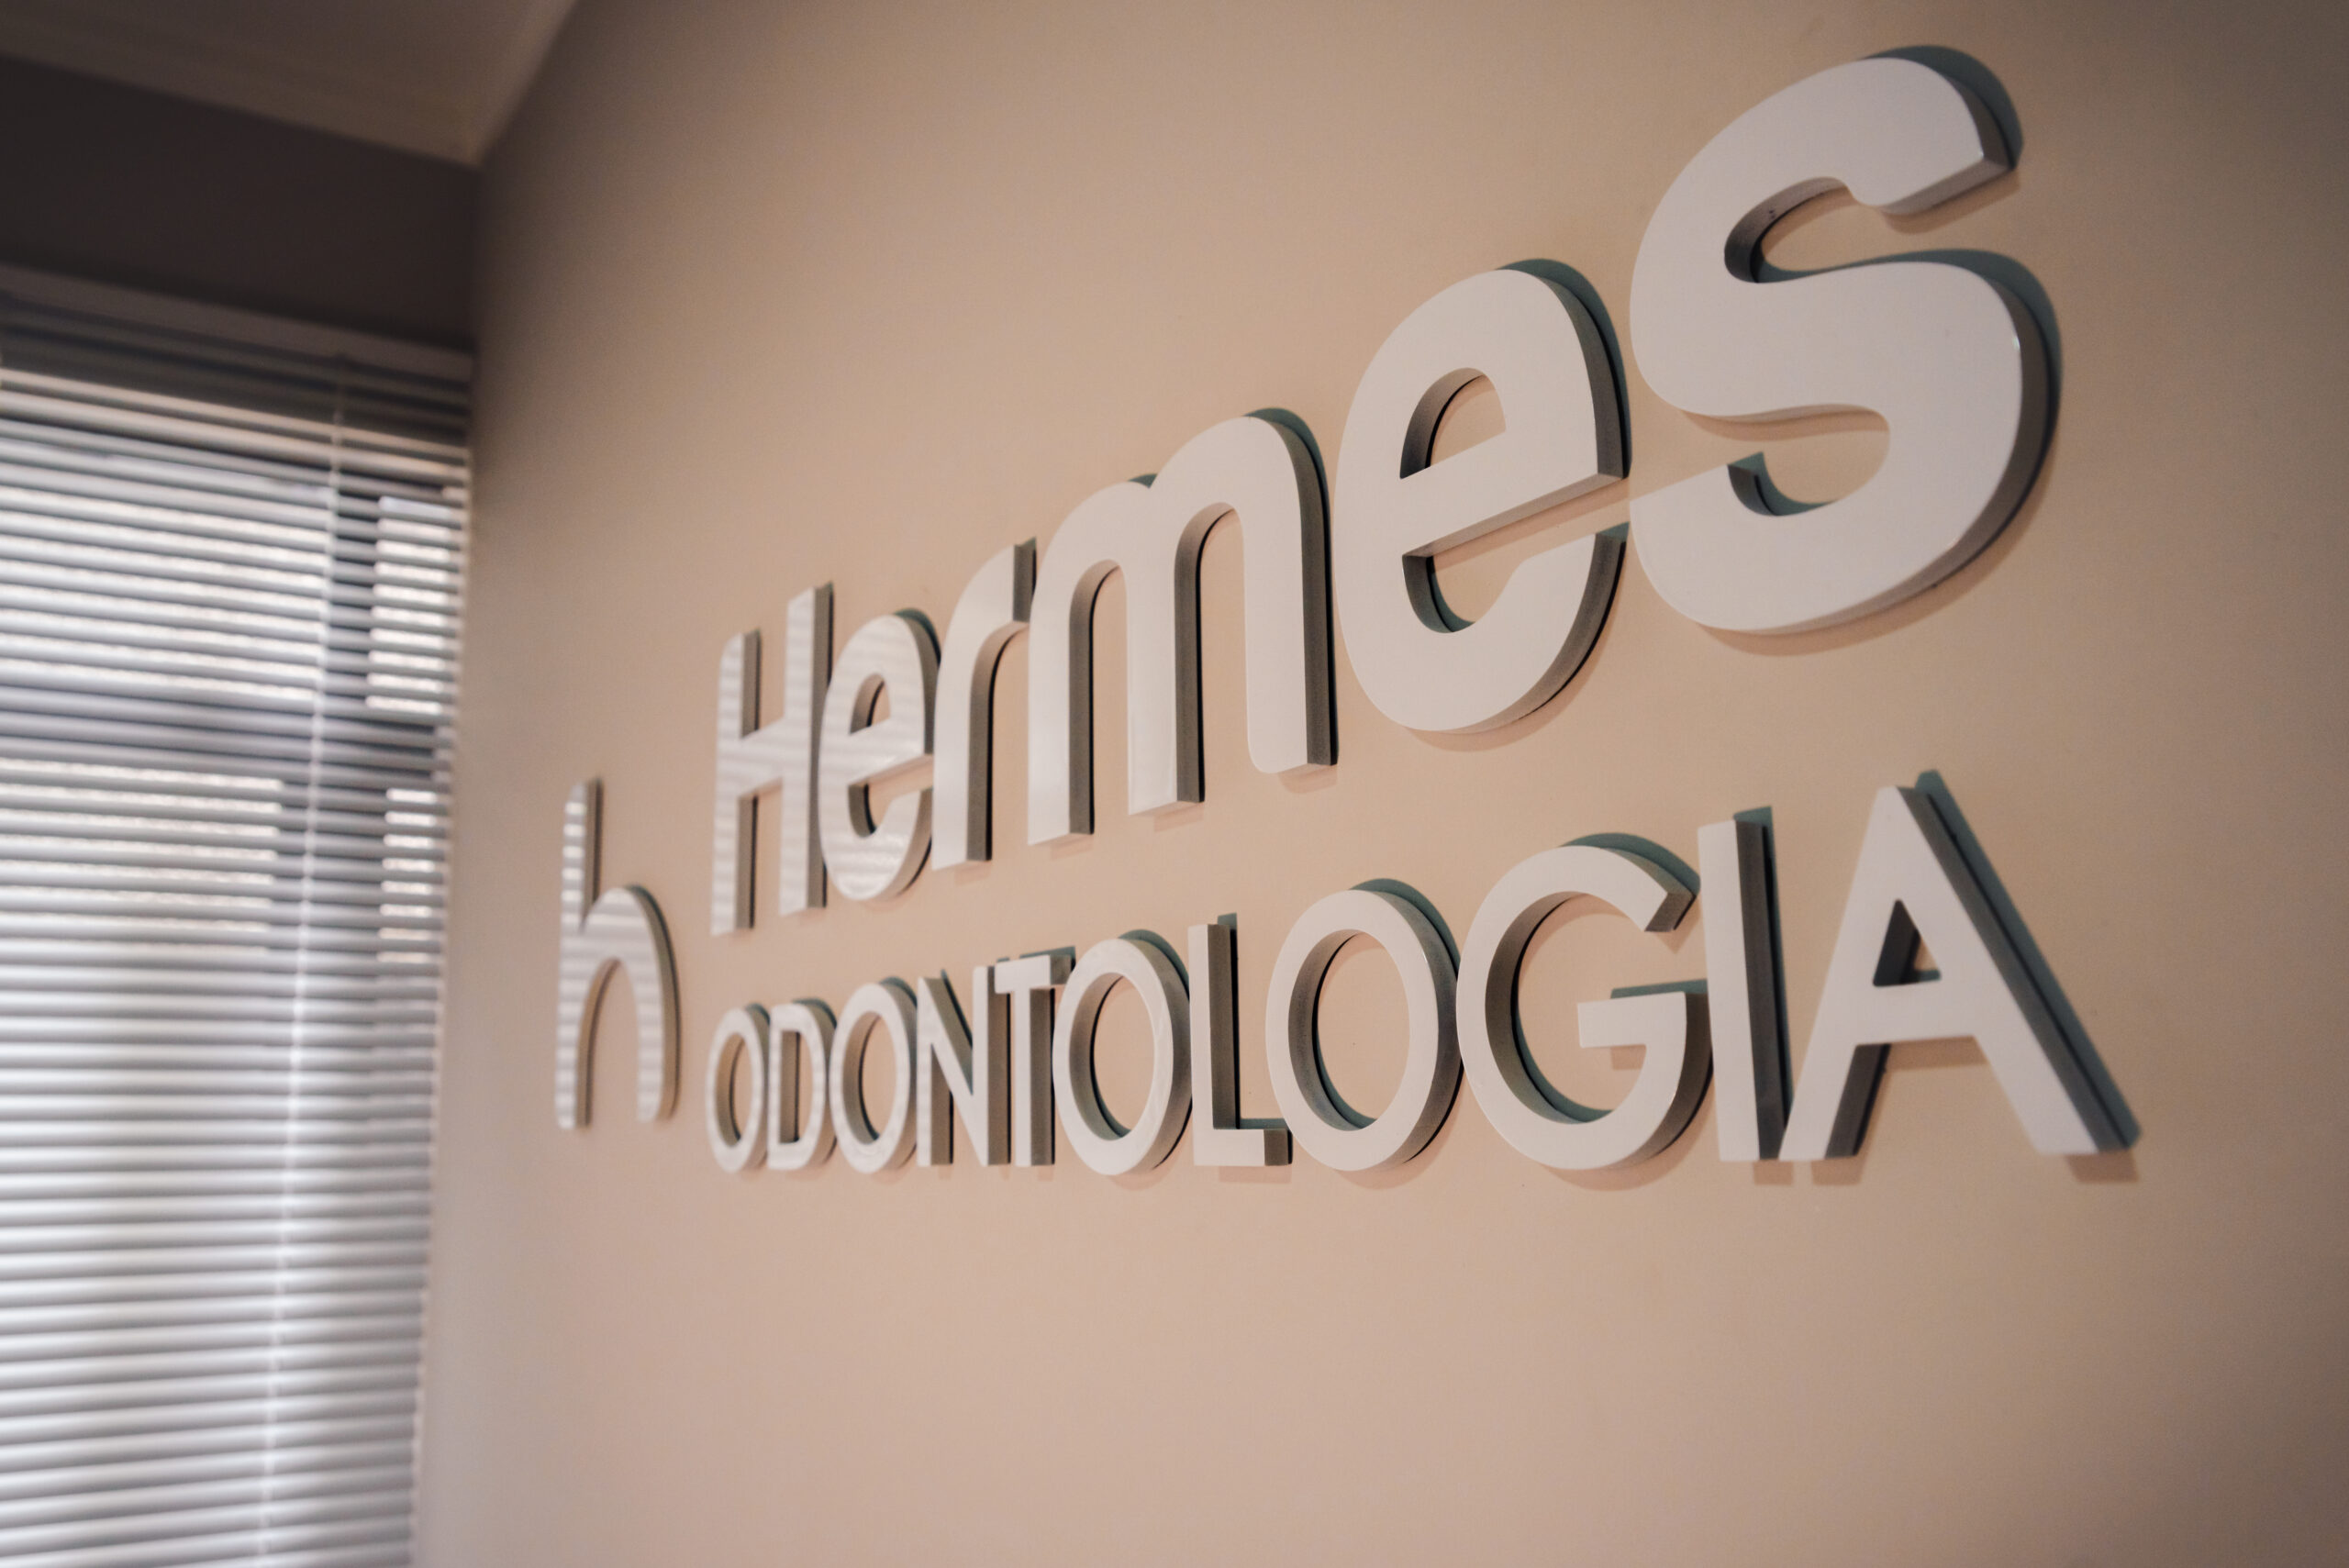 HERMES ODONTOLOGIA